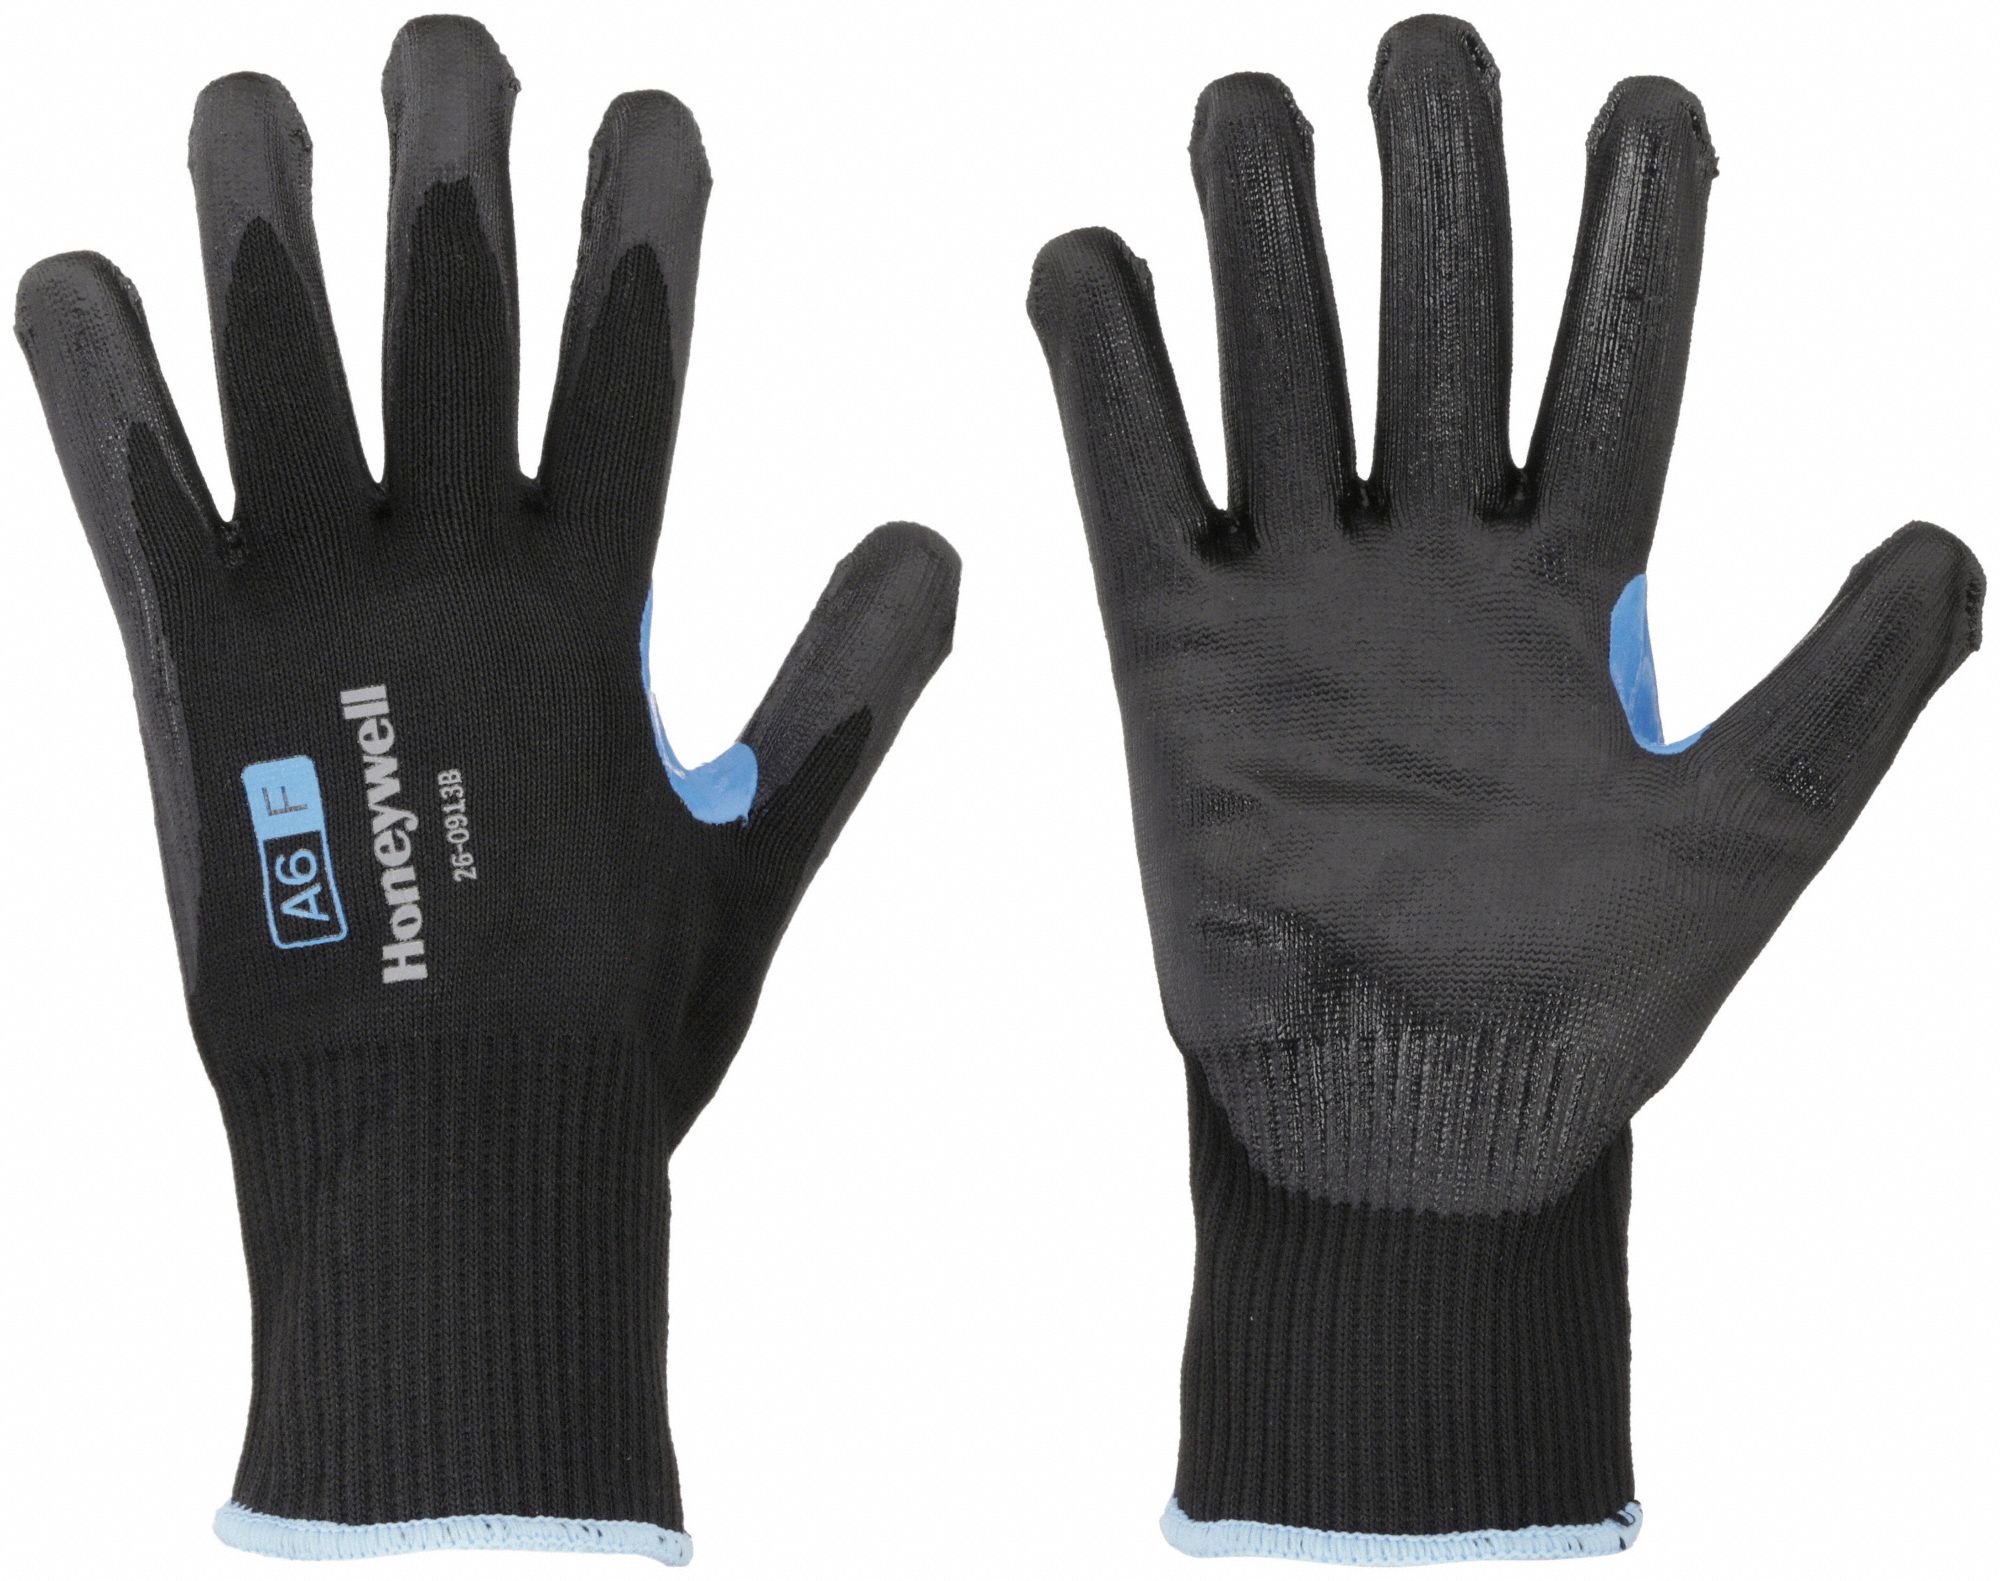 Cut resistant gloves: How to choose - Digitx-Safety Gloves Manufacturer